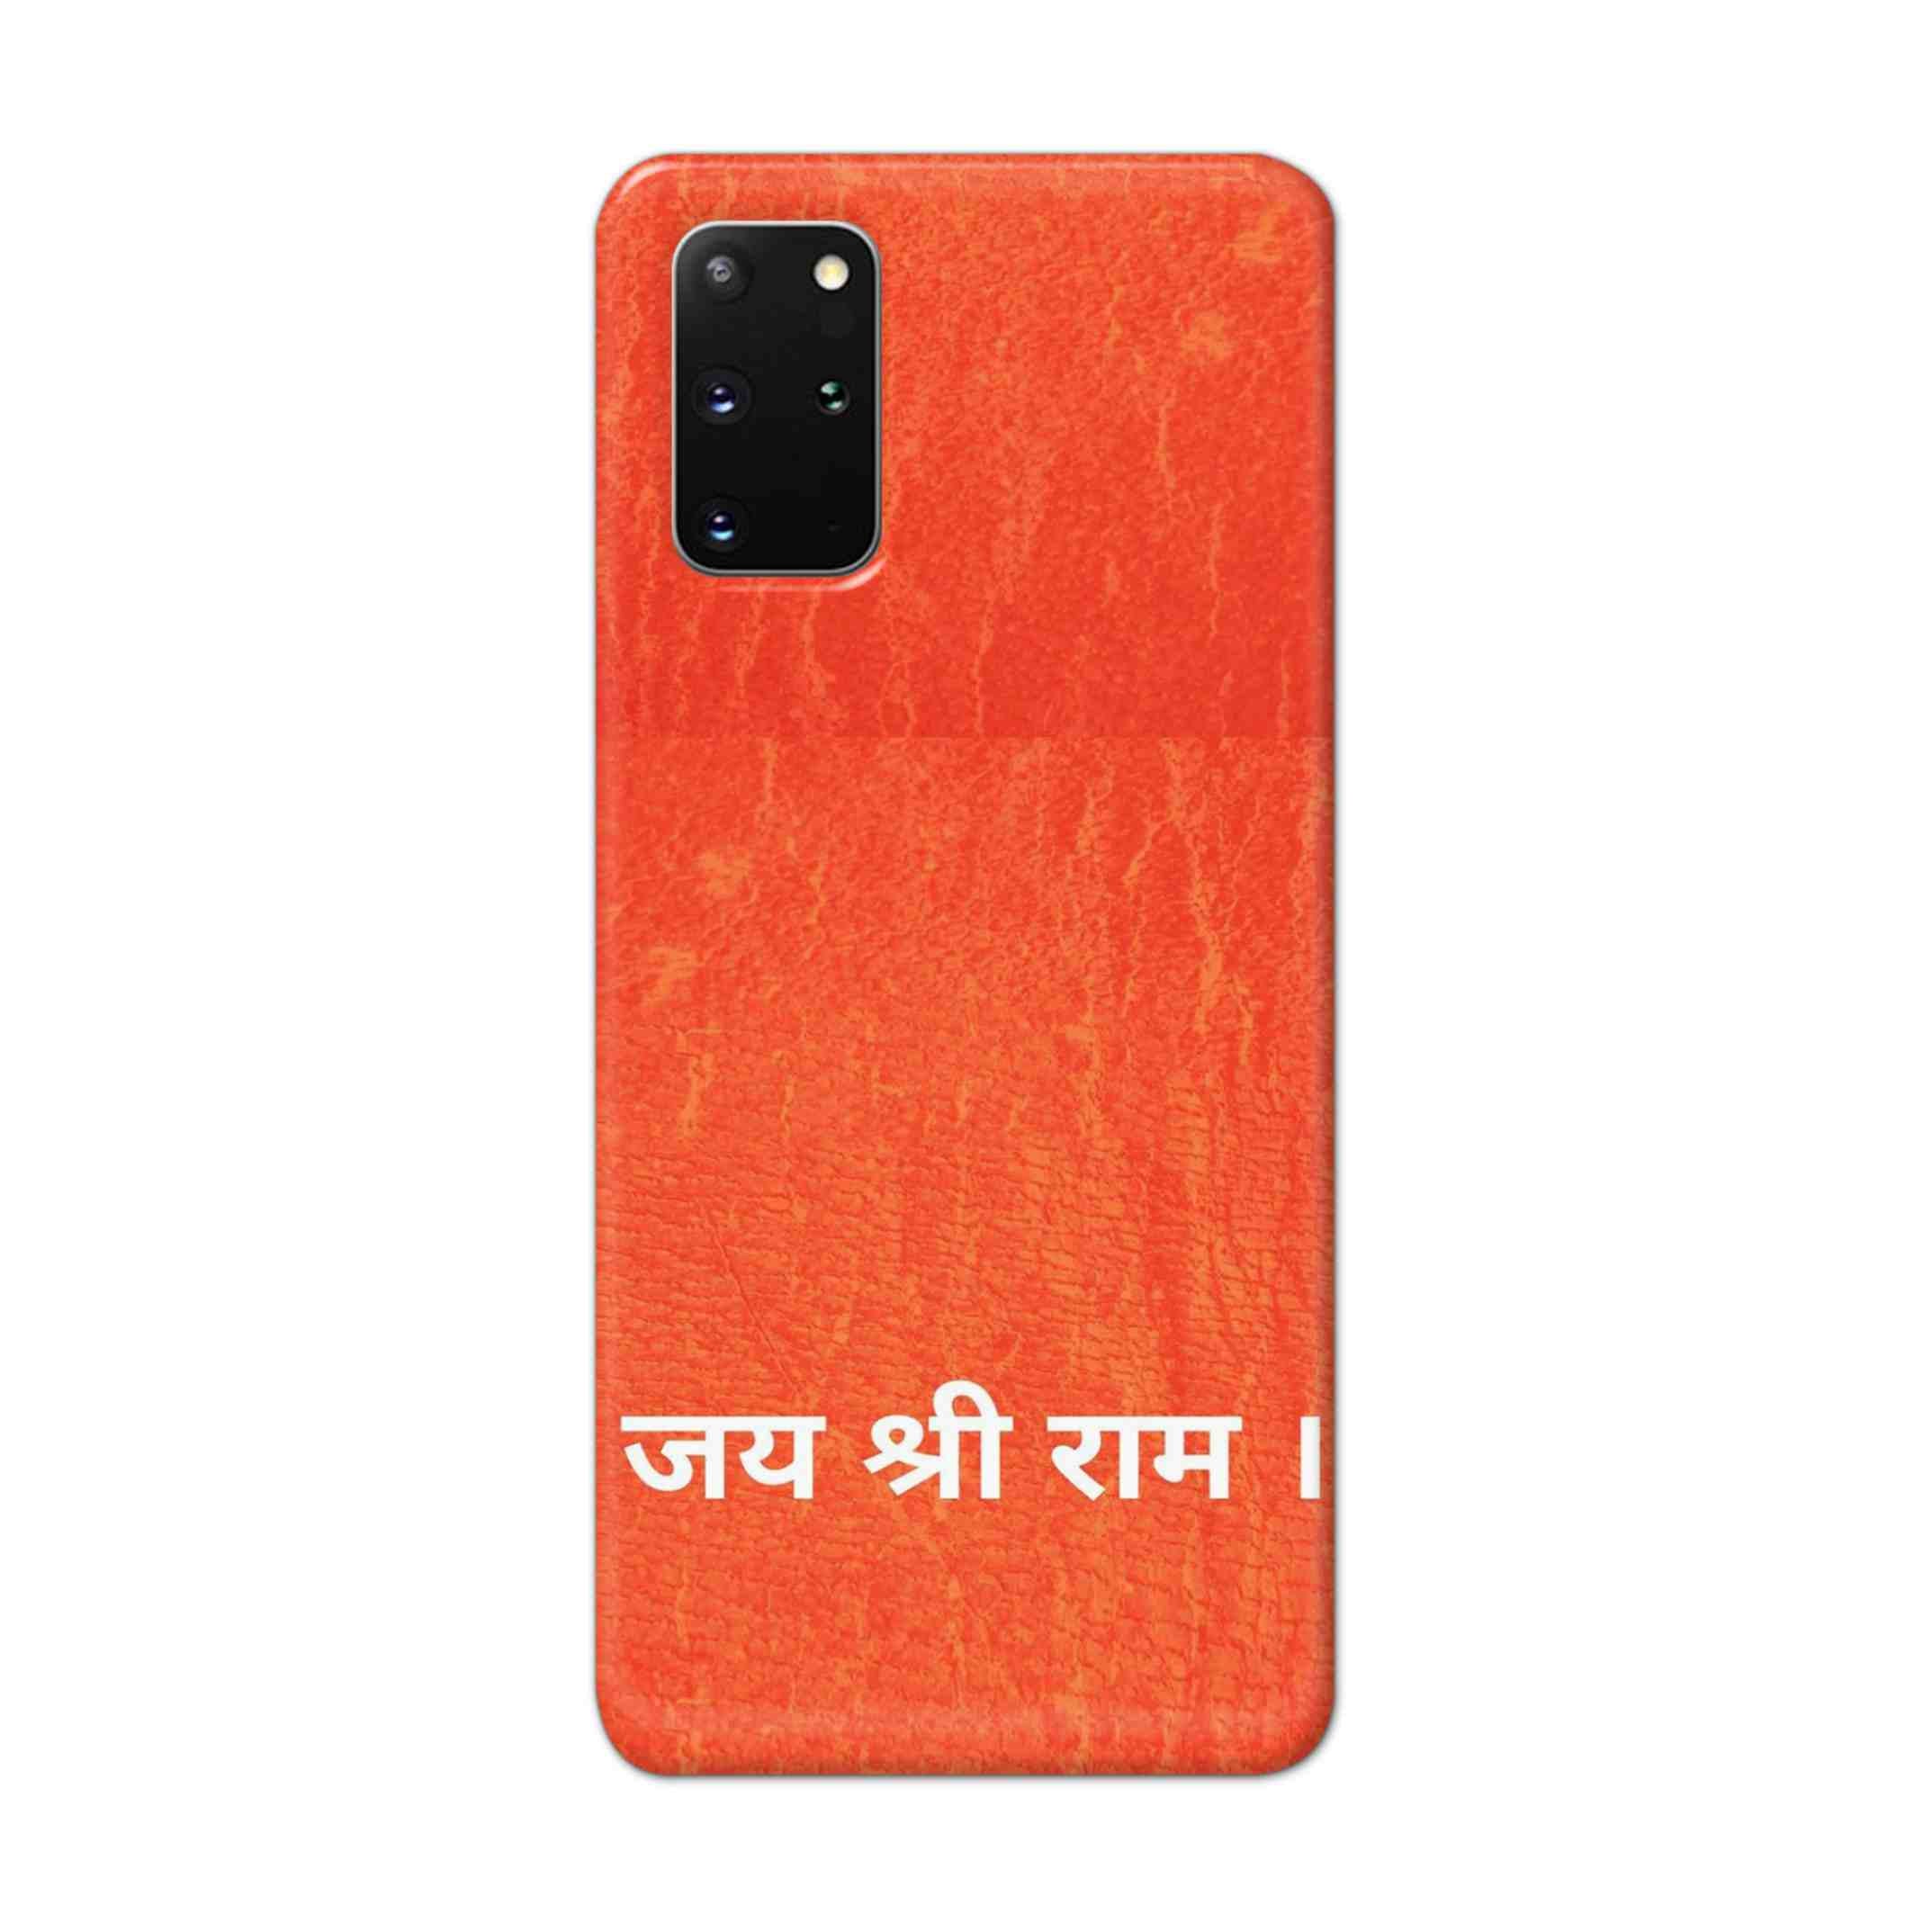 Buy Jai Shree Ram Hard Back Mobile Phone Case Cover For Samsung Galaxy S20 Plus Online